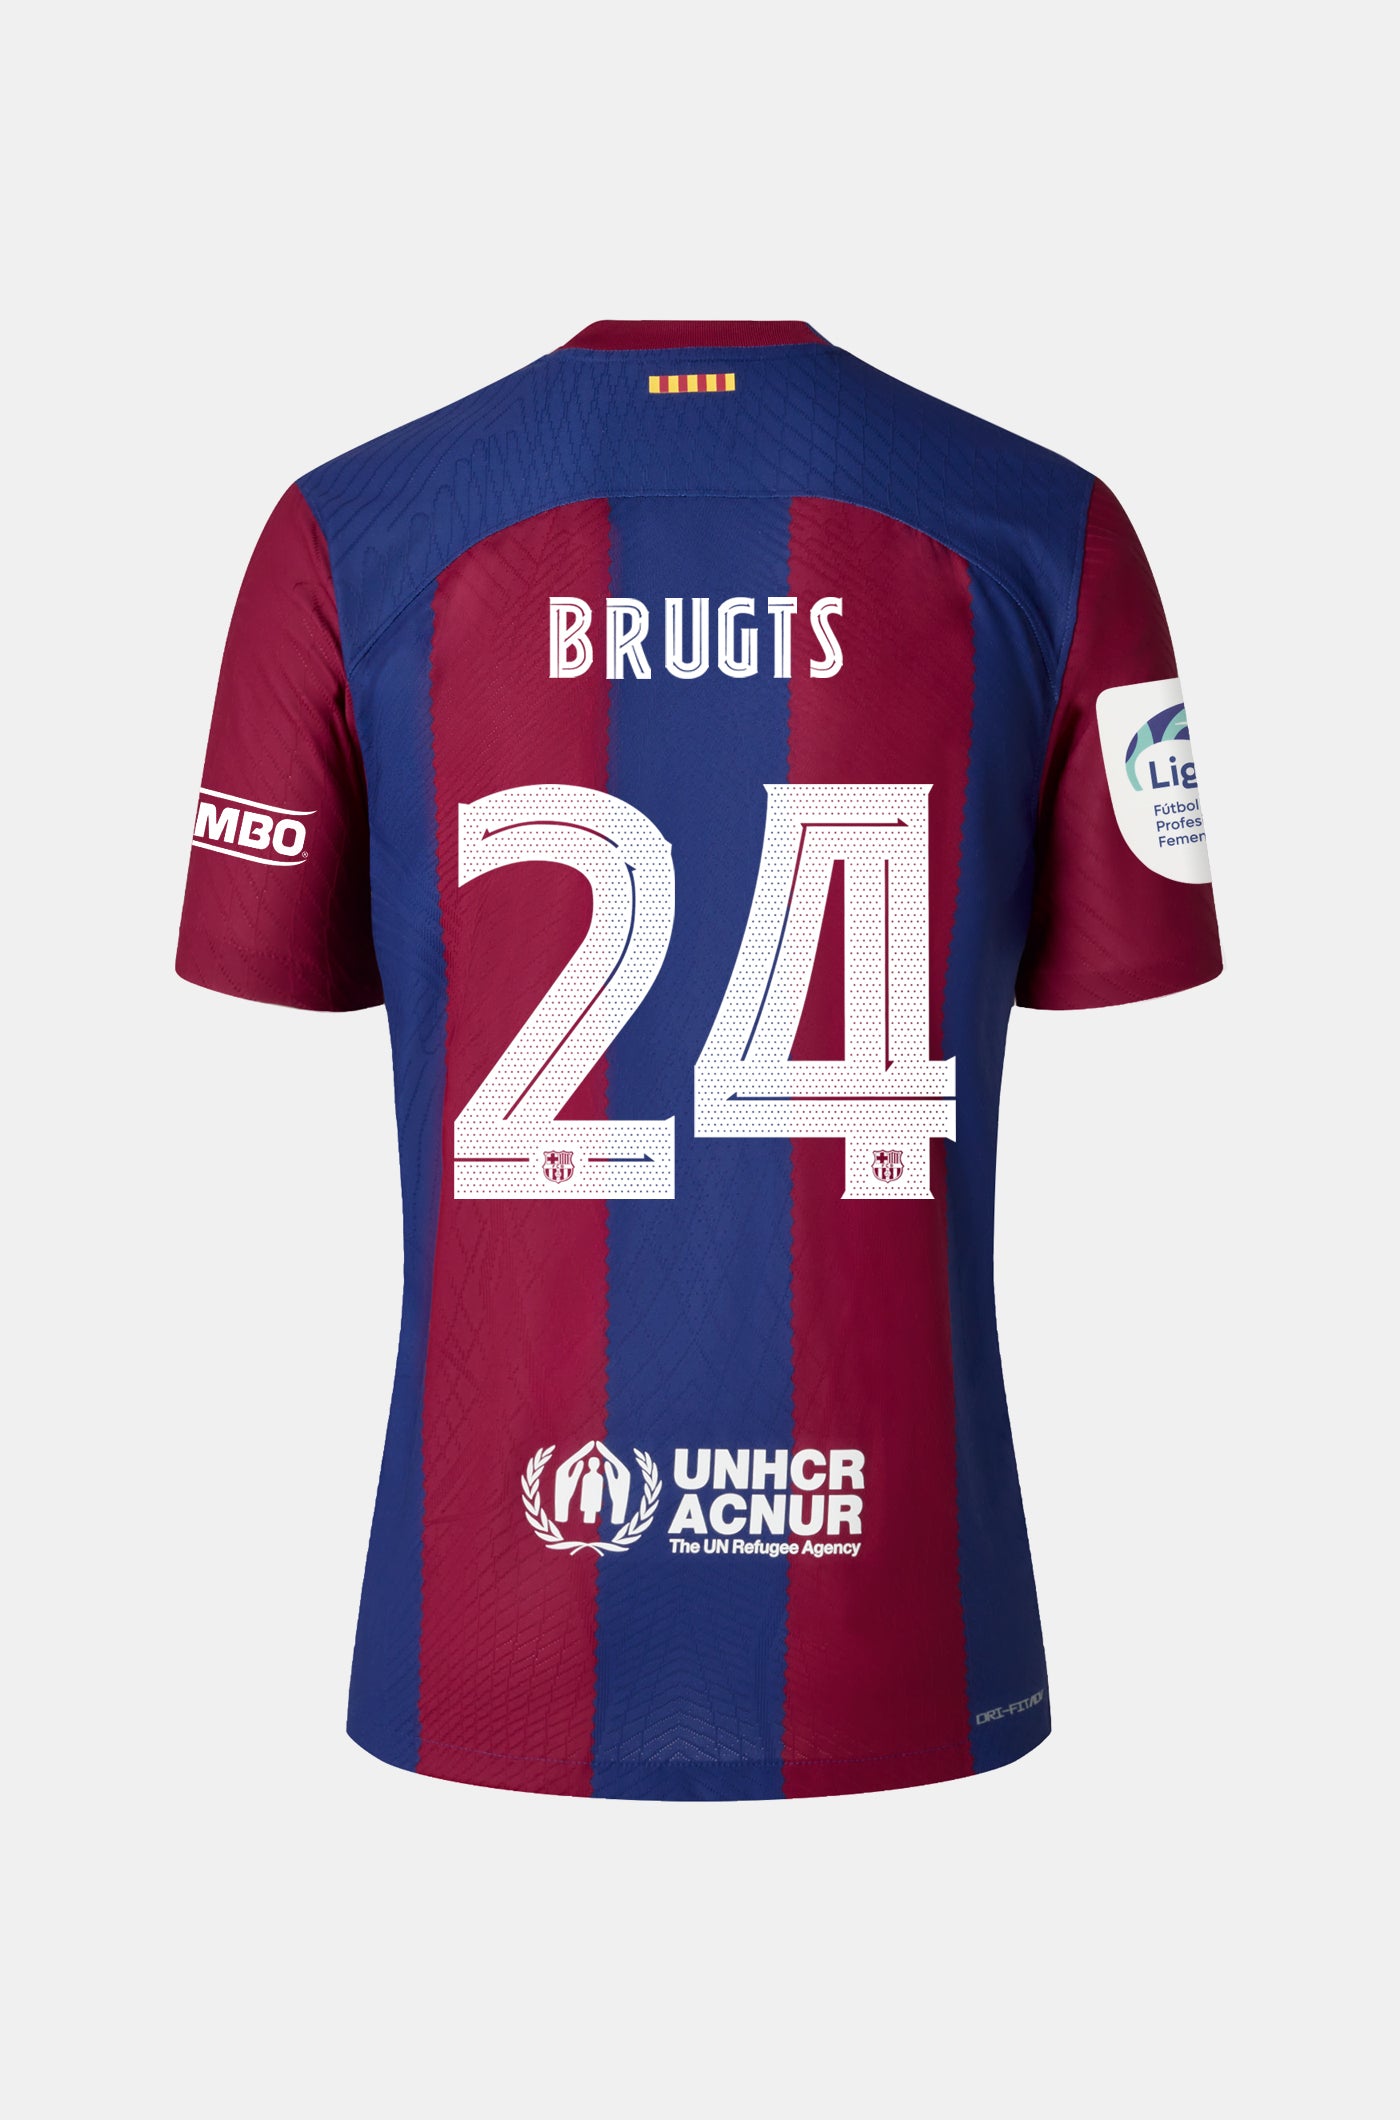 Liga F FC Barcelona home shirt 23/24 Player's Edition - BRUGTS